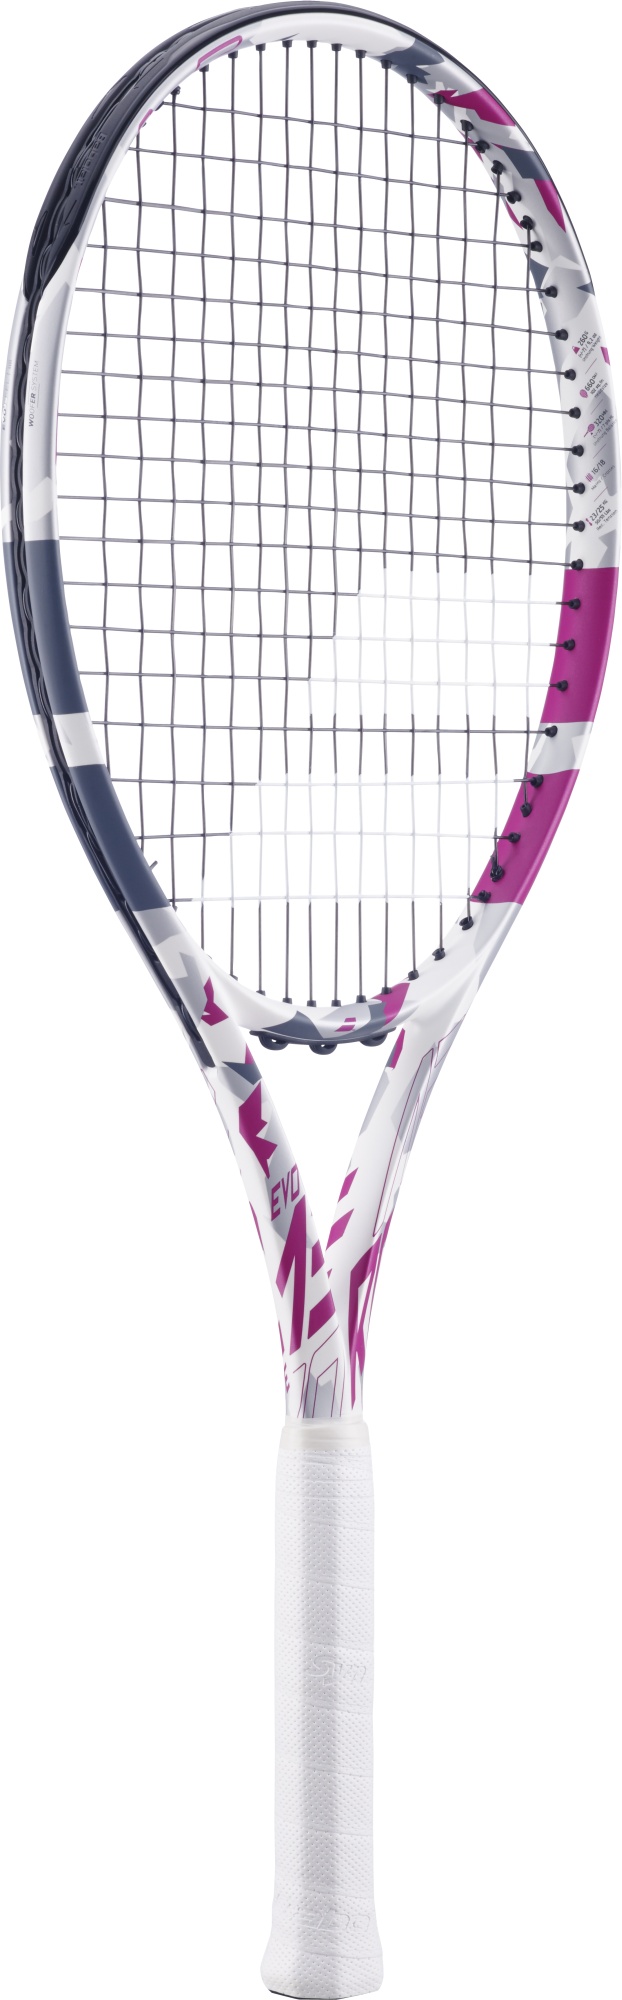 Tennis racket